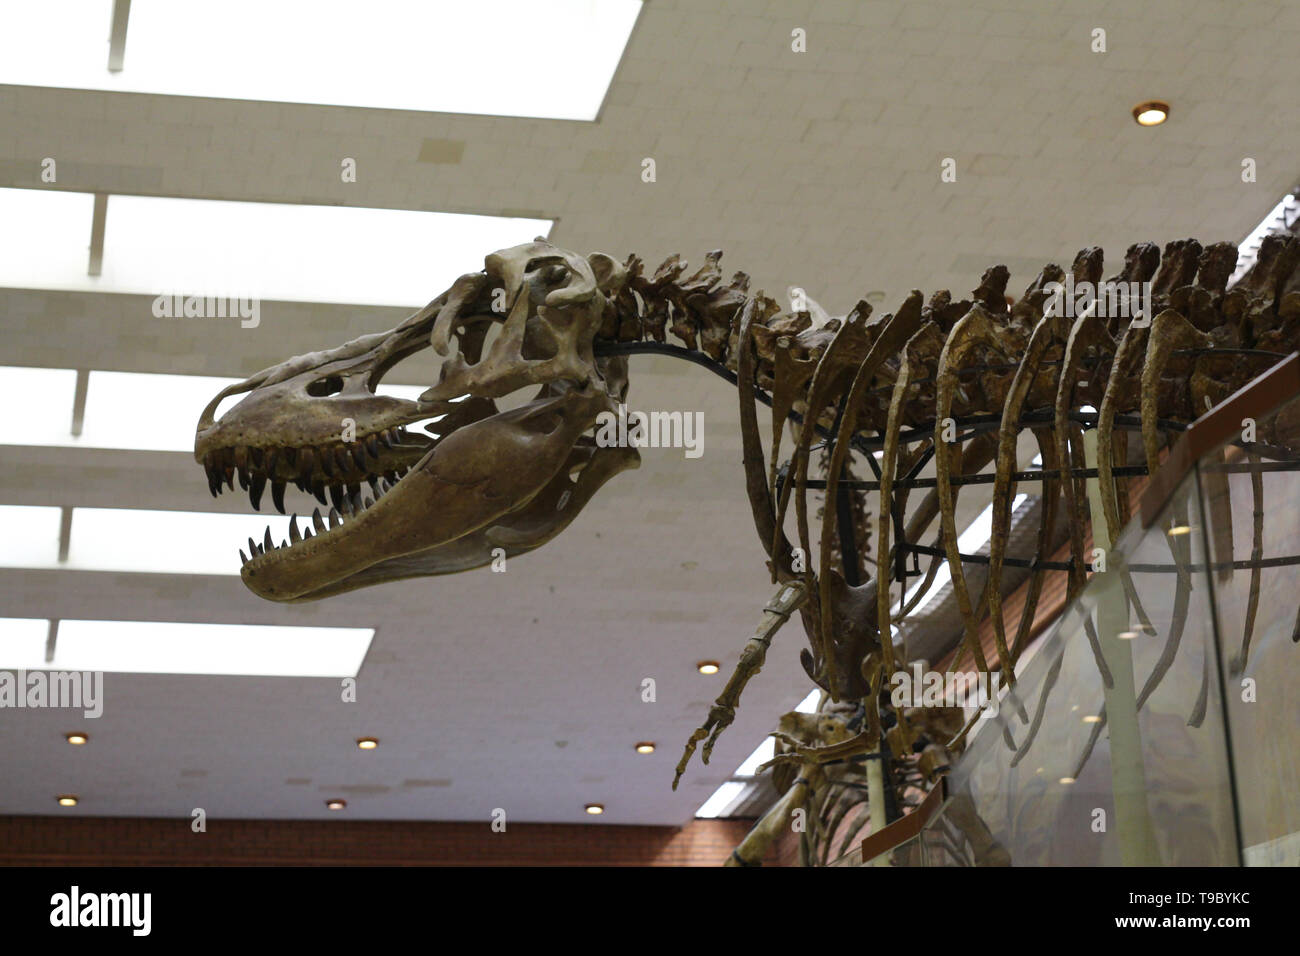 Moscow 05.12.2019: Paleontological Museum. Skulls and skeletons of dinosaurs. Big dinosaur head with sharp teeth. Paleontology Stock Photo